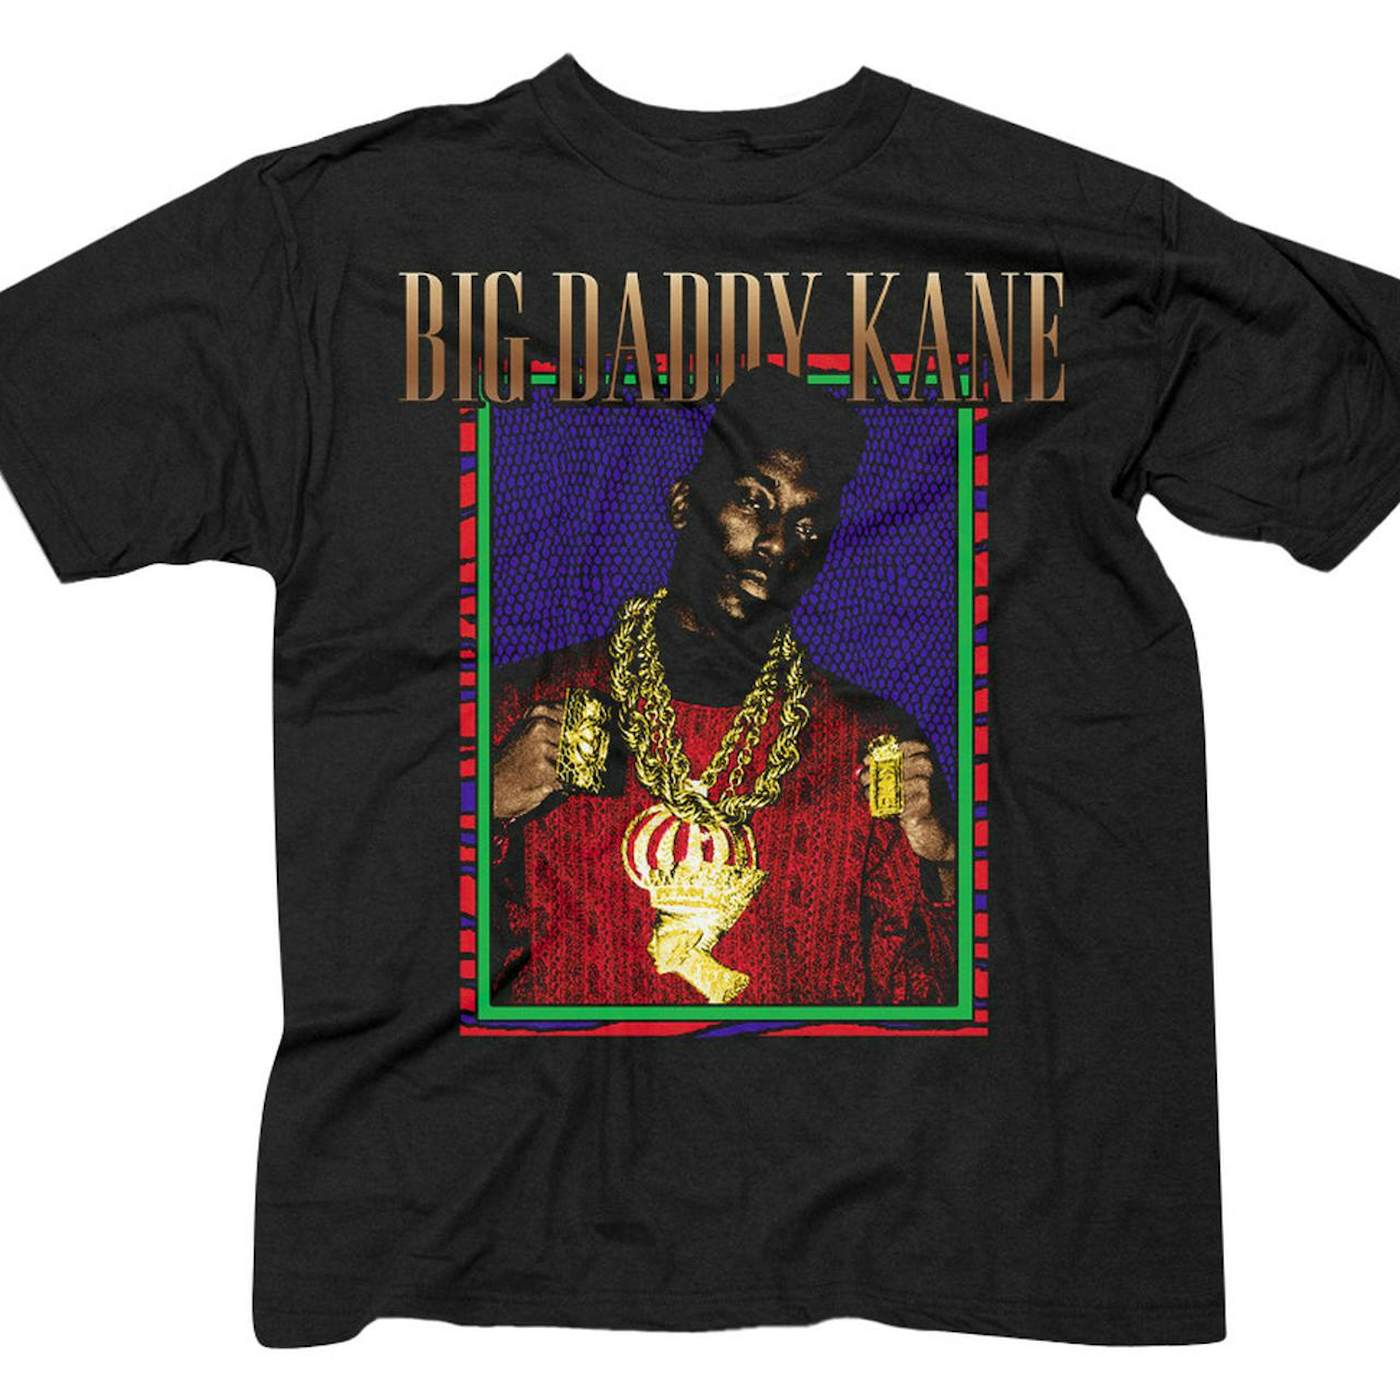 Big Daddy Kane "Half Steppin" T-Shirt